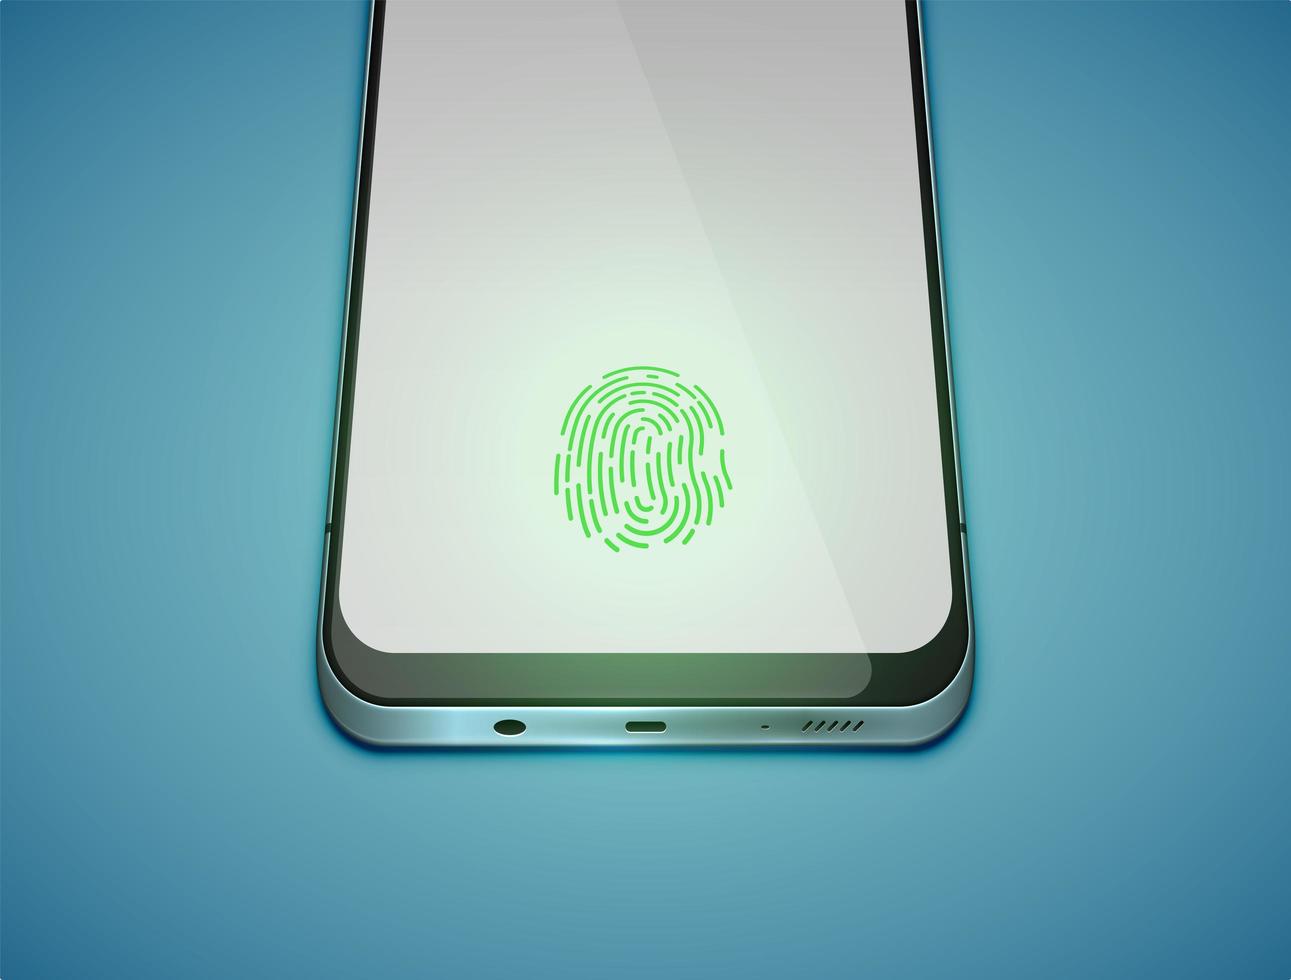 Realistic smartpgone with green fingerprint sensor on display, vector illustration